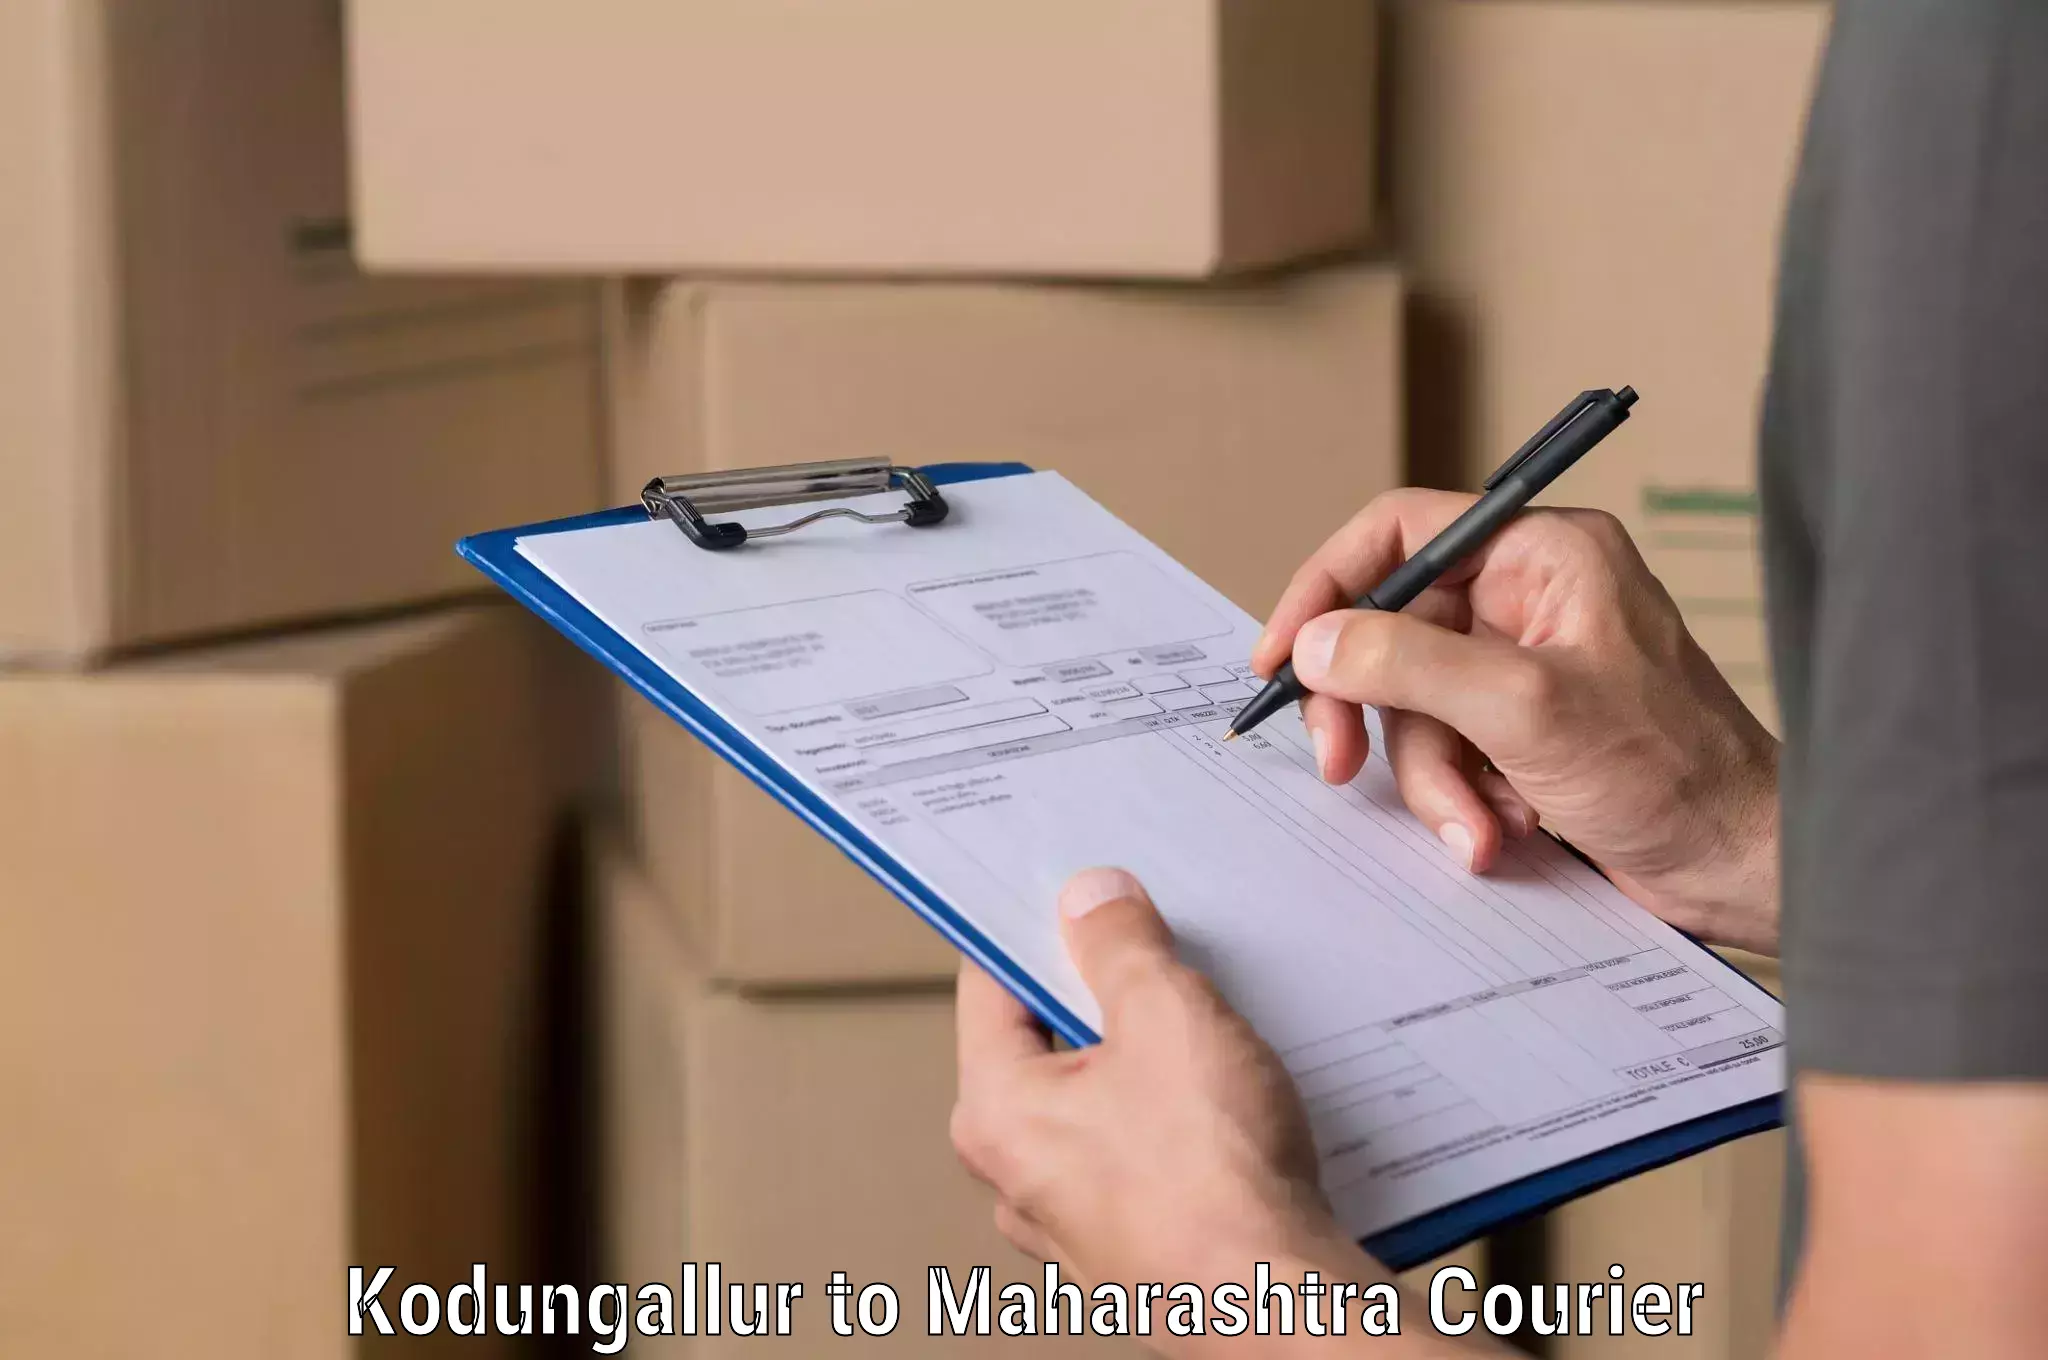 Flexible delivery schedules in Kodungallur to Sangamner